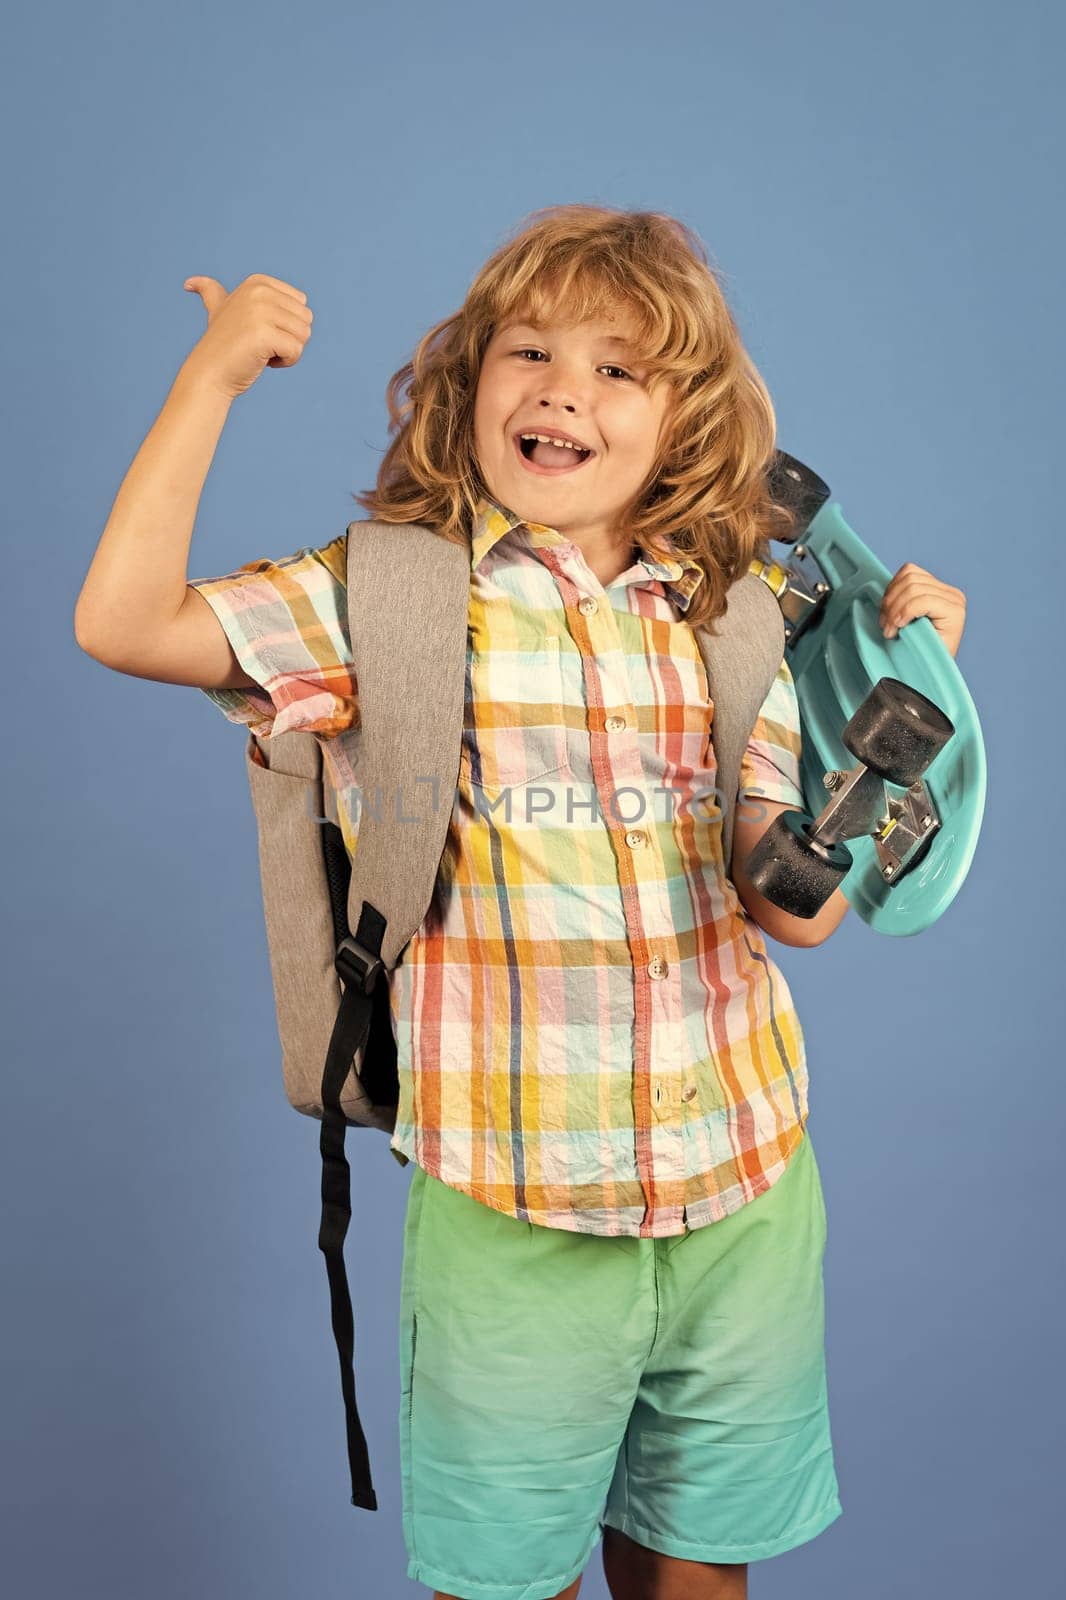 Happy child boy holding skateboard over blue background isolated. Studio portrait of fashion kids